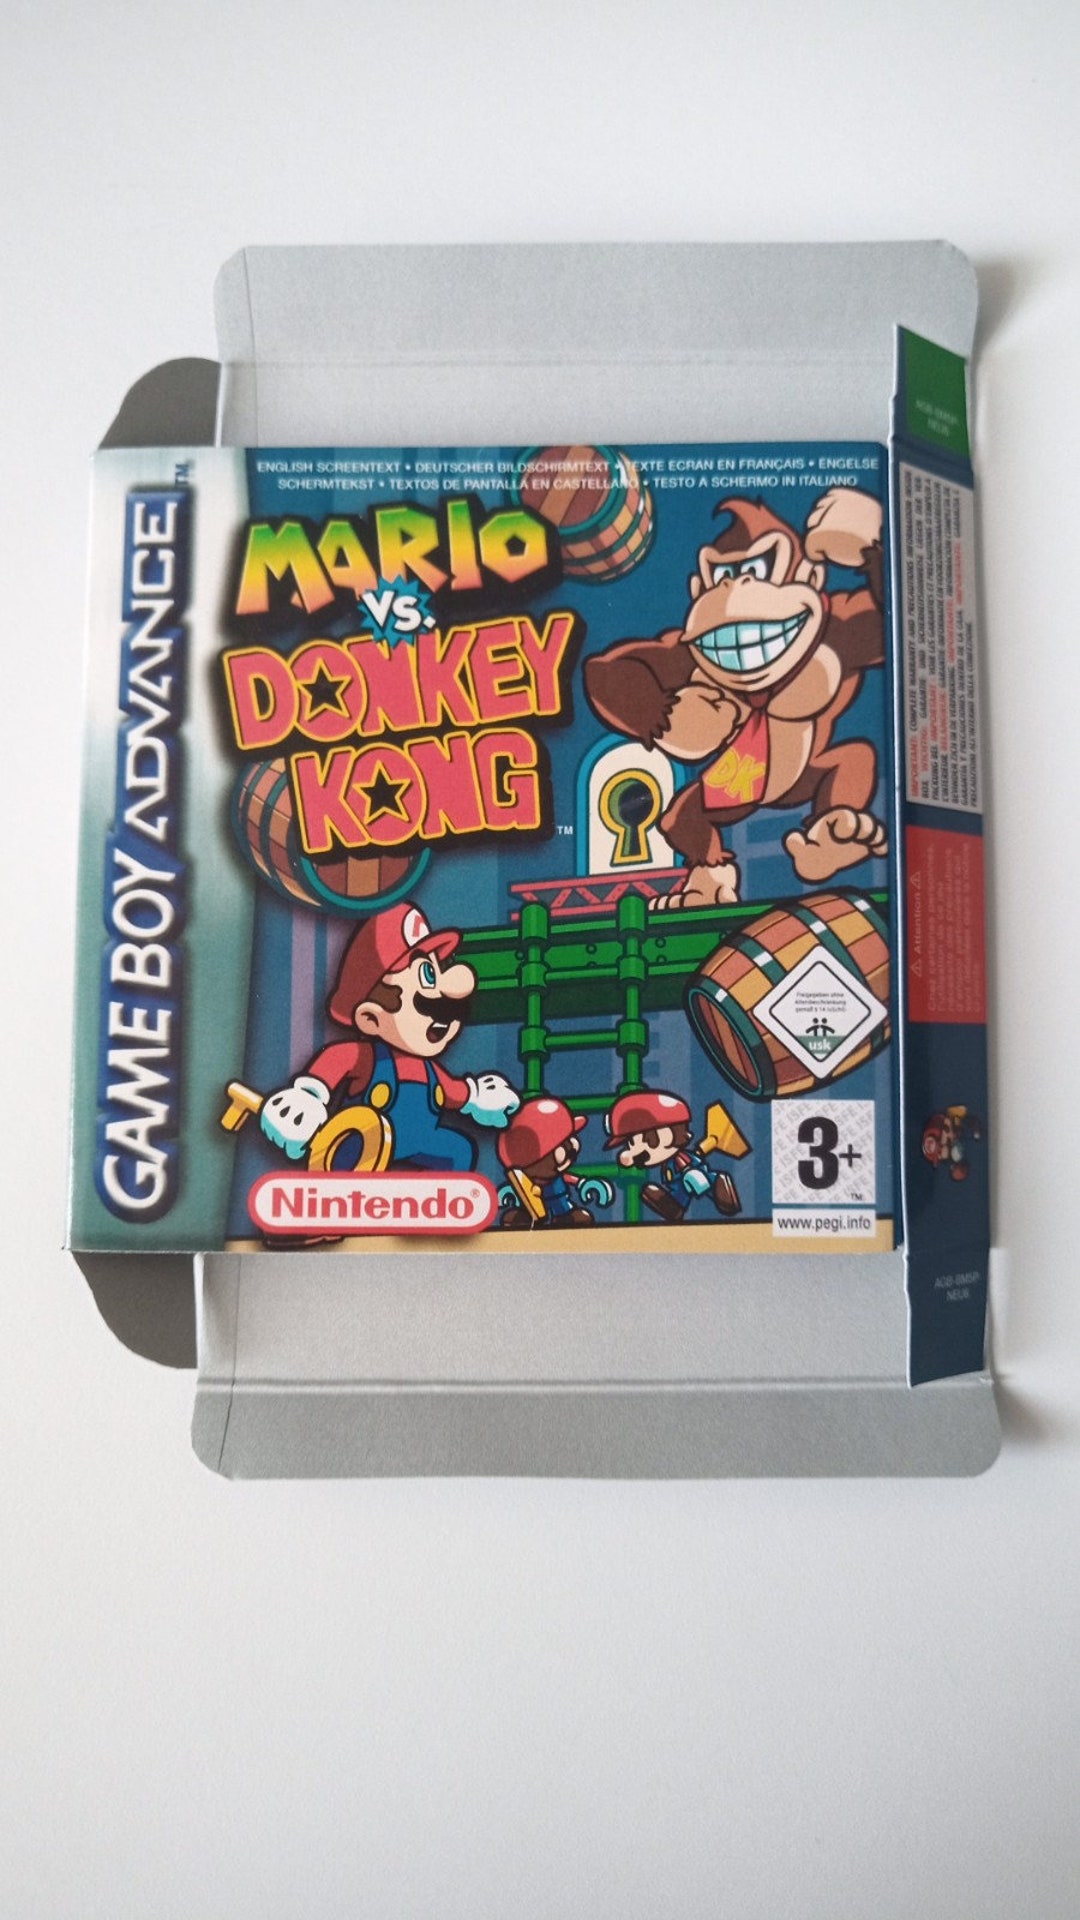 Mario vs Donkey Kong: Return to New Donk City, Fantendo - Game Ideas &  More